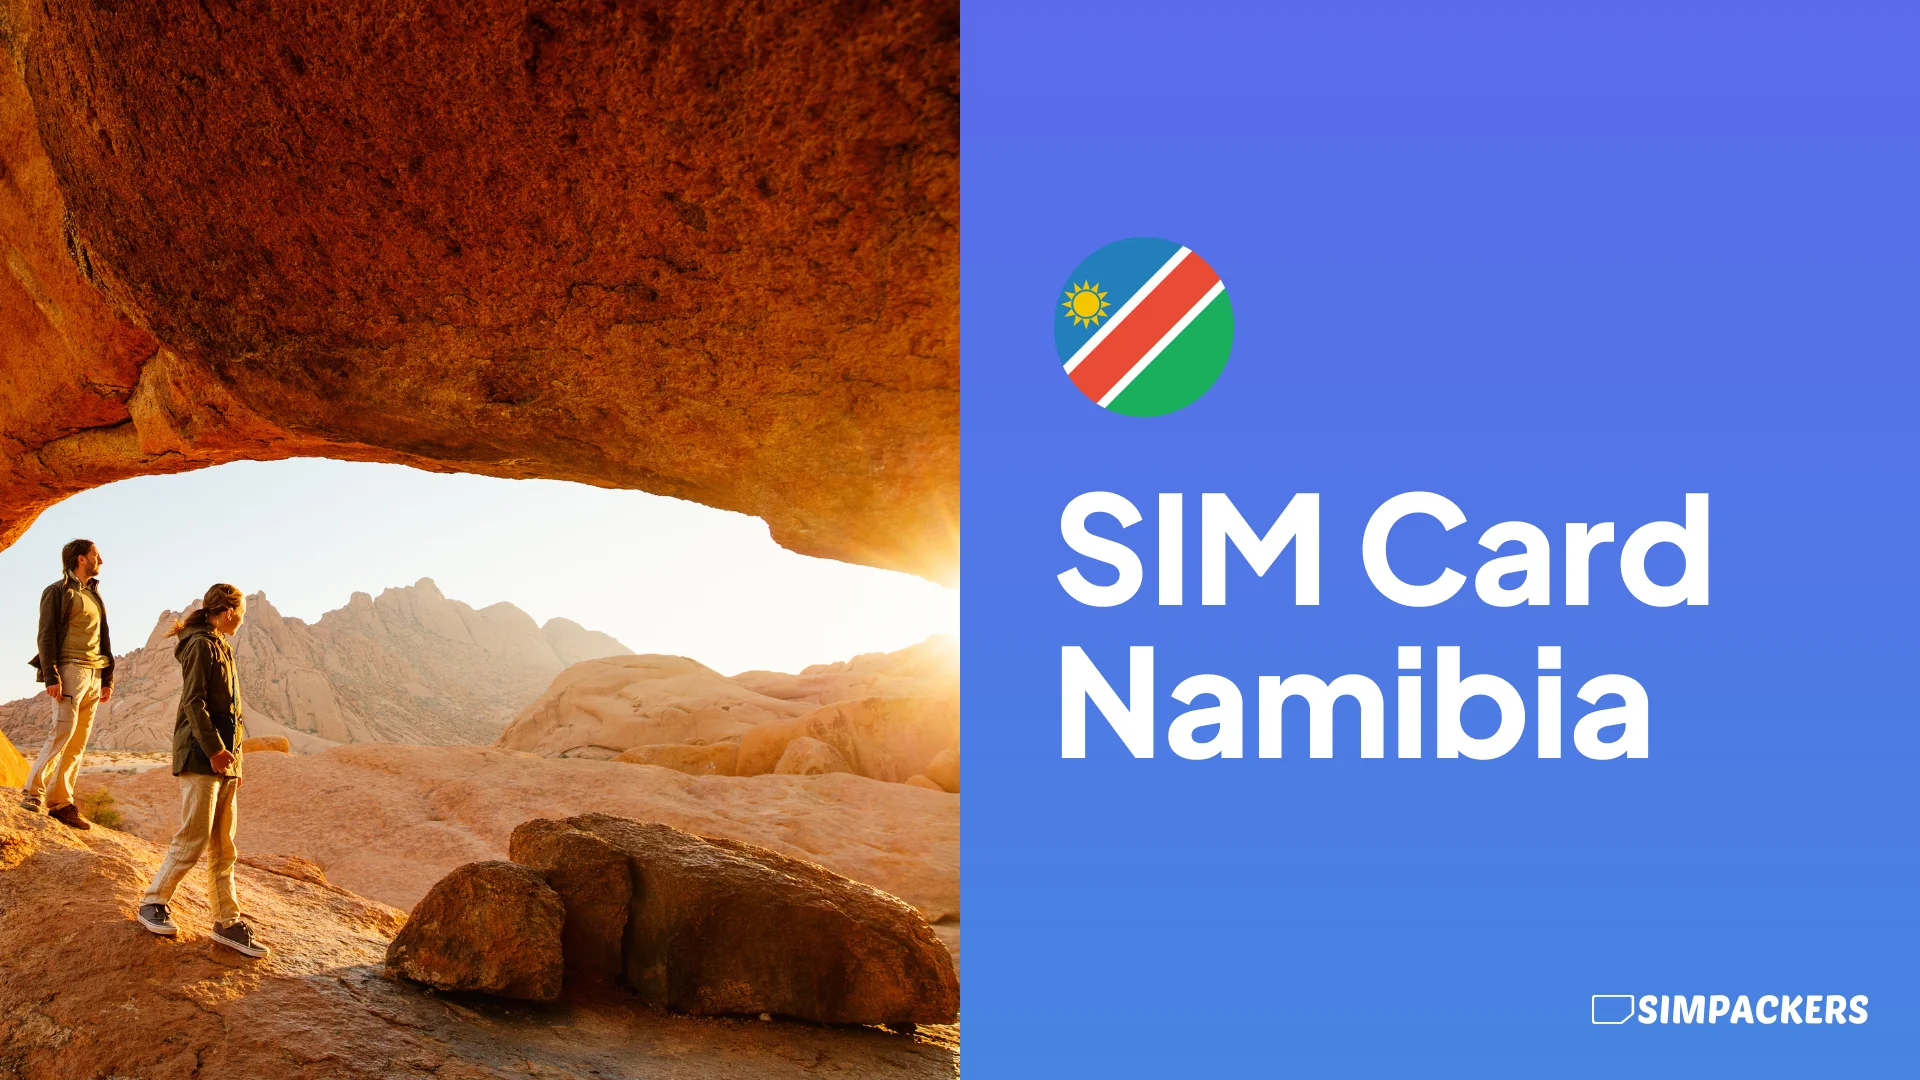 EN/FEATURED_IMAGES/sim-card-namibia.webp